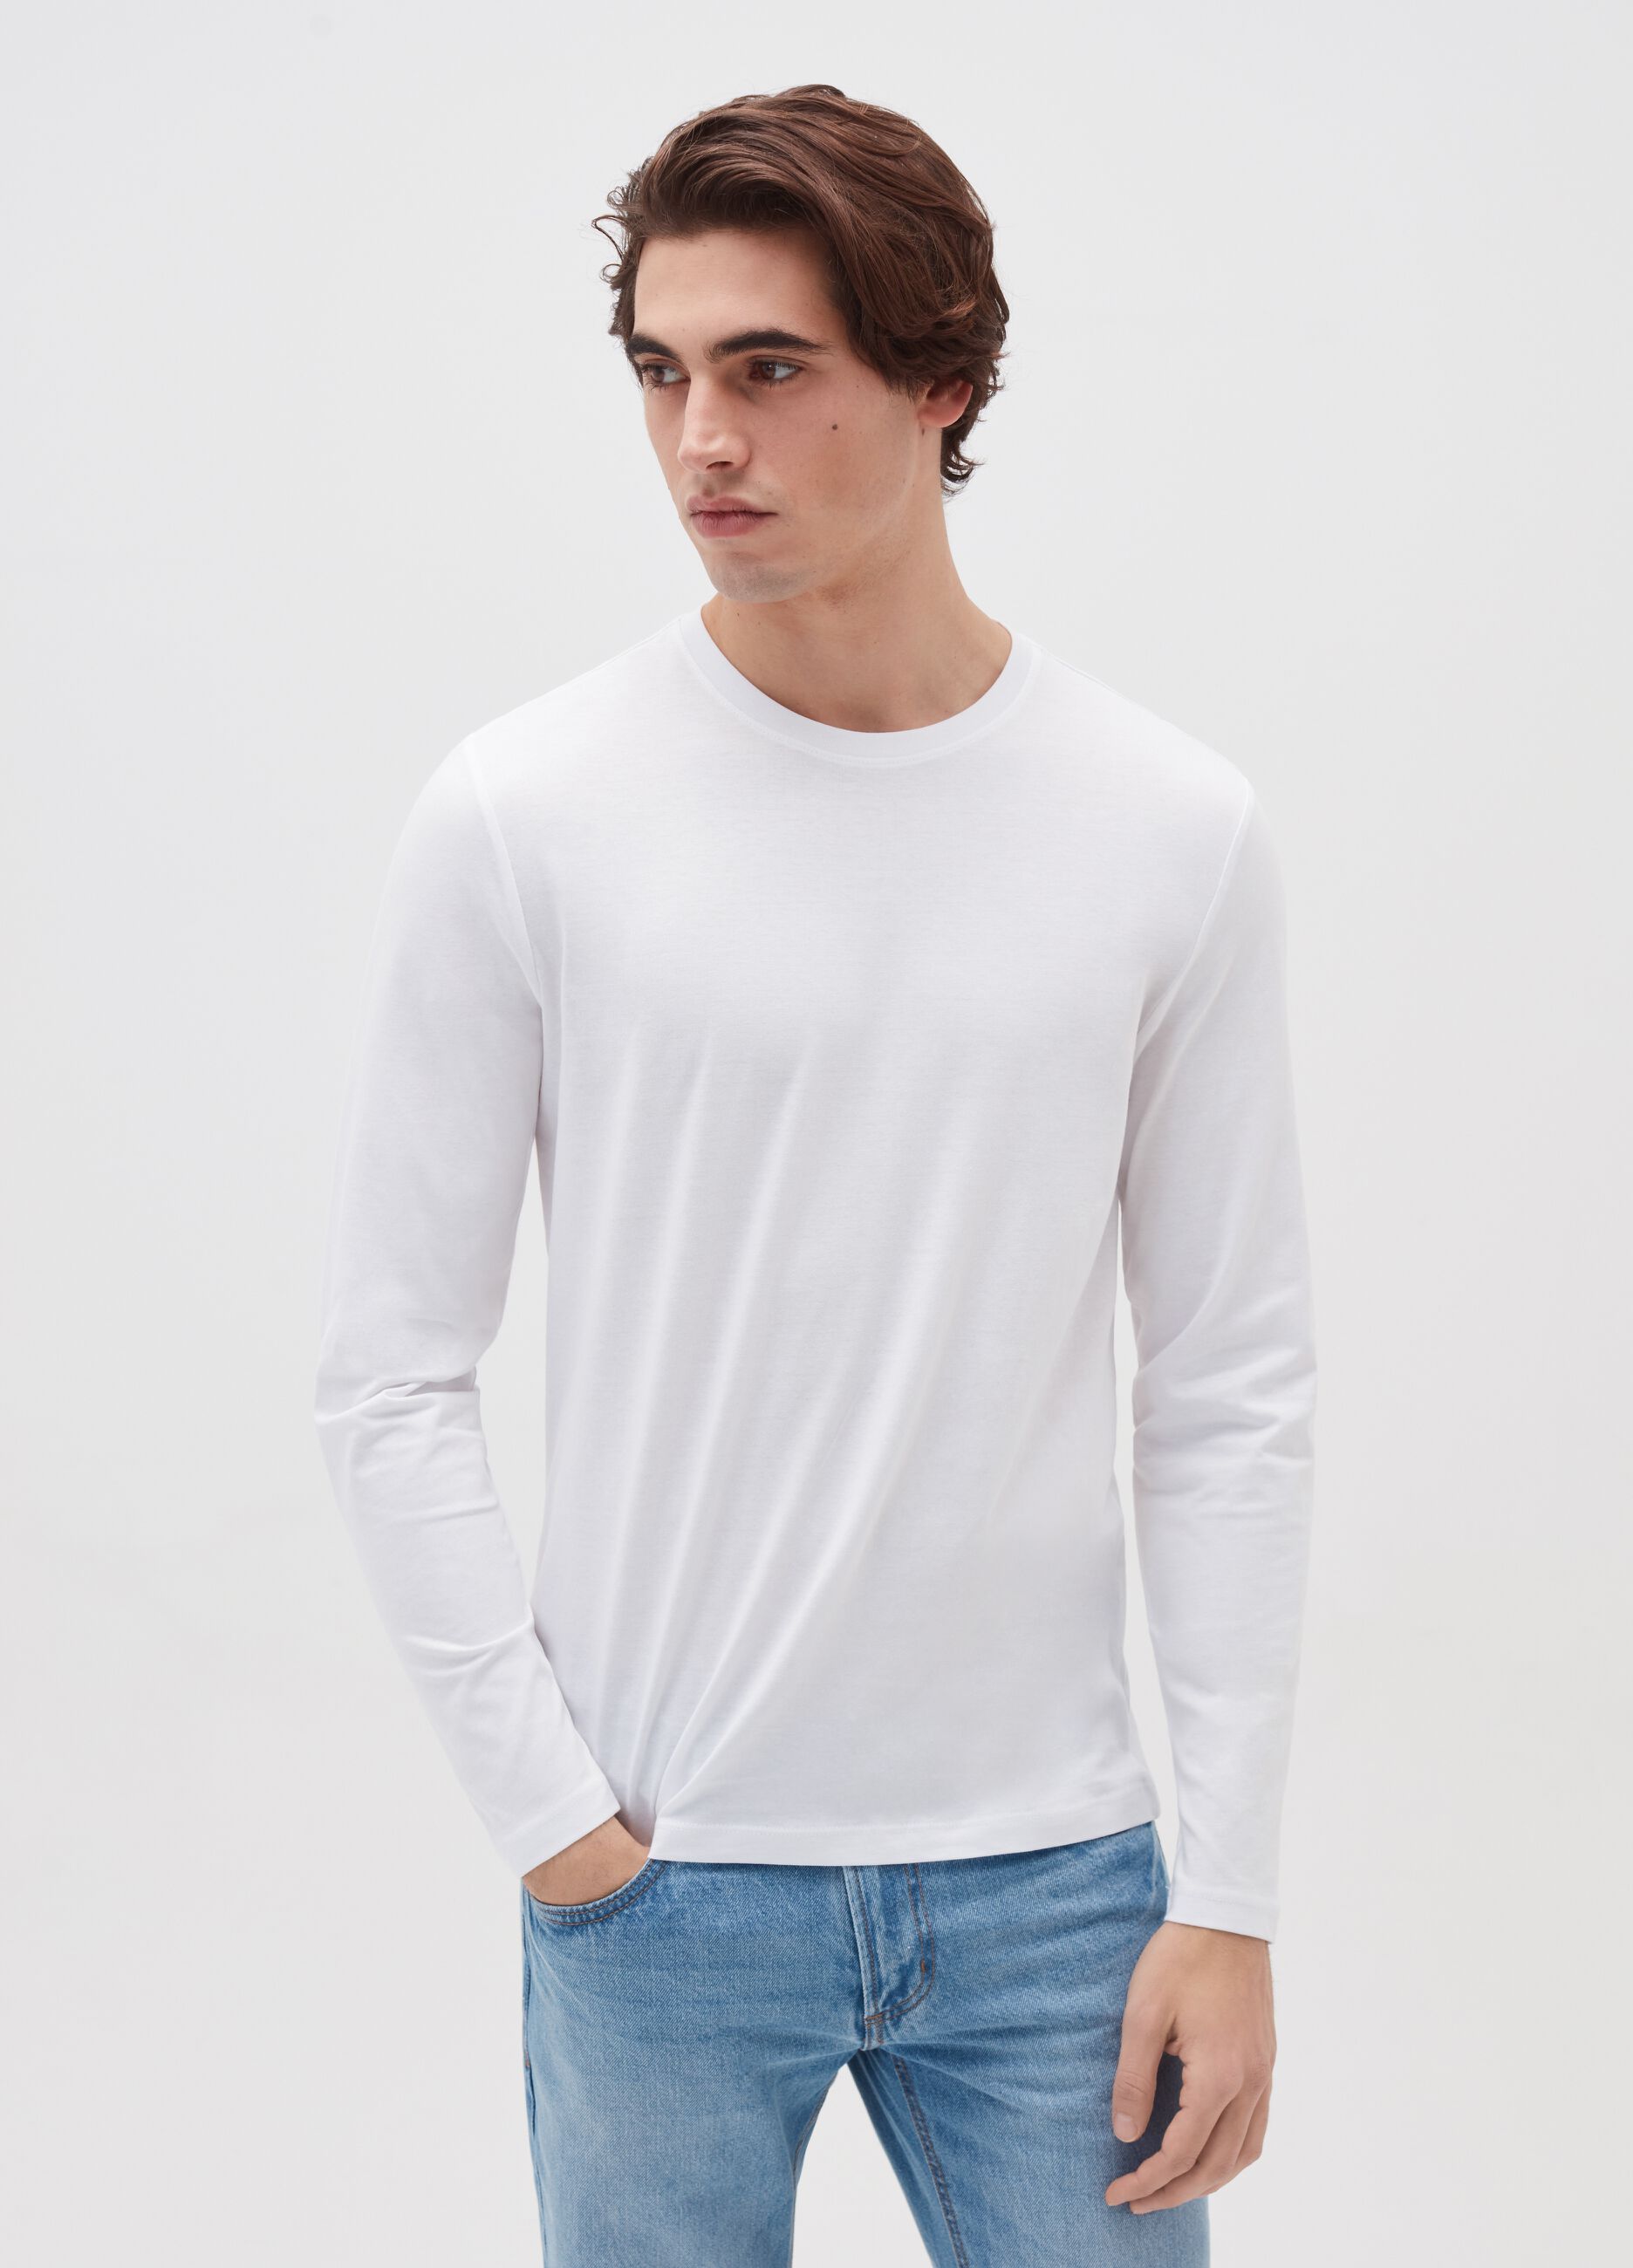 Camiseta algodón 100% manga larga